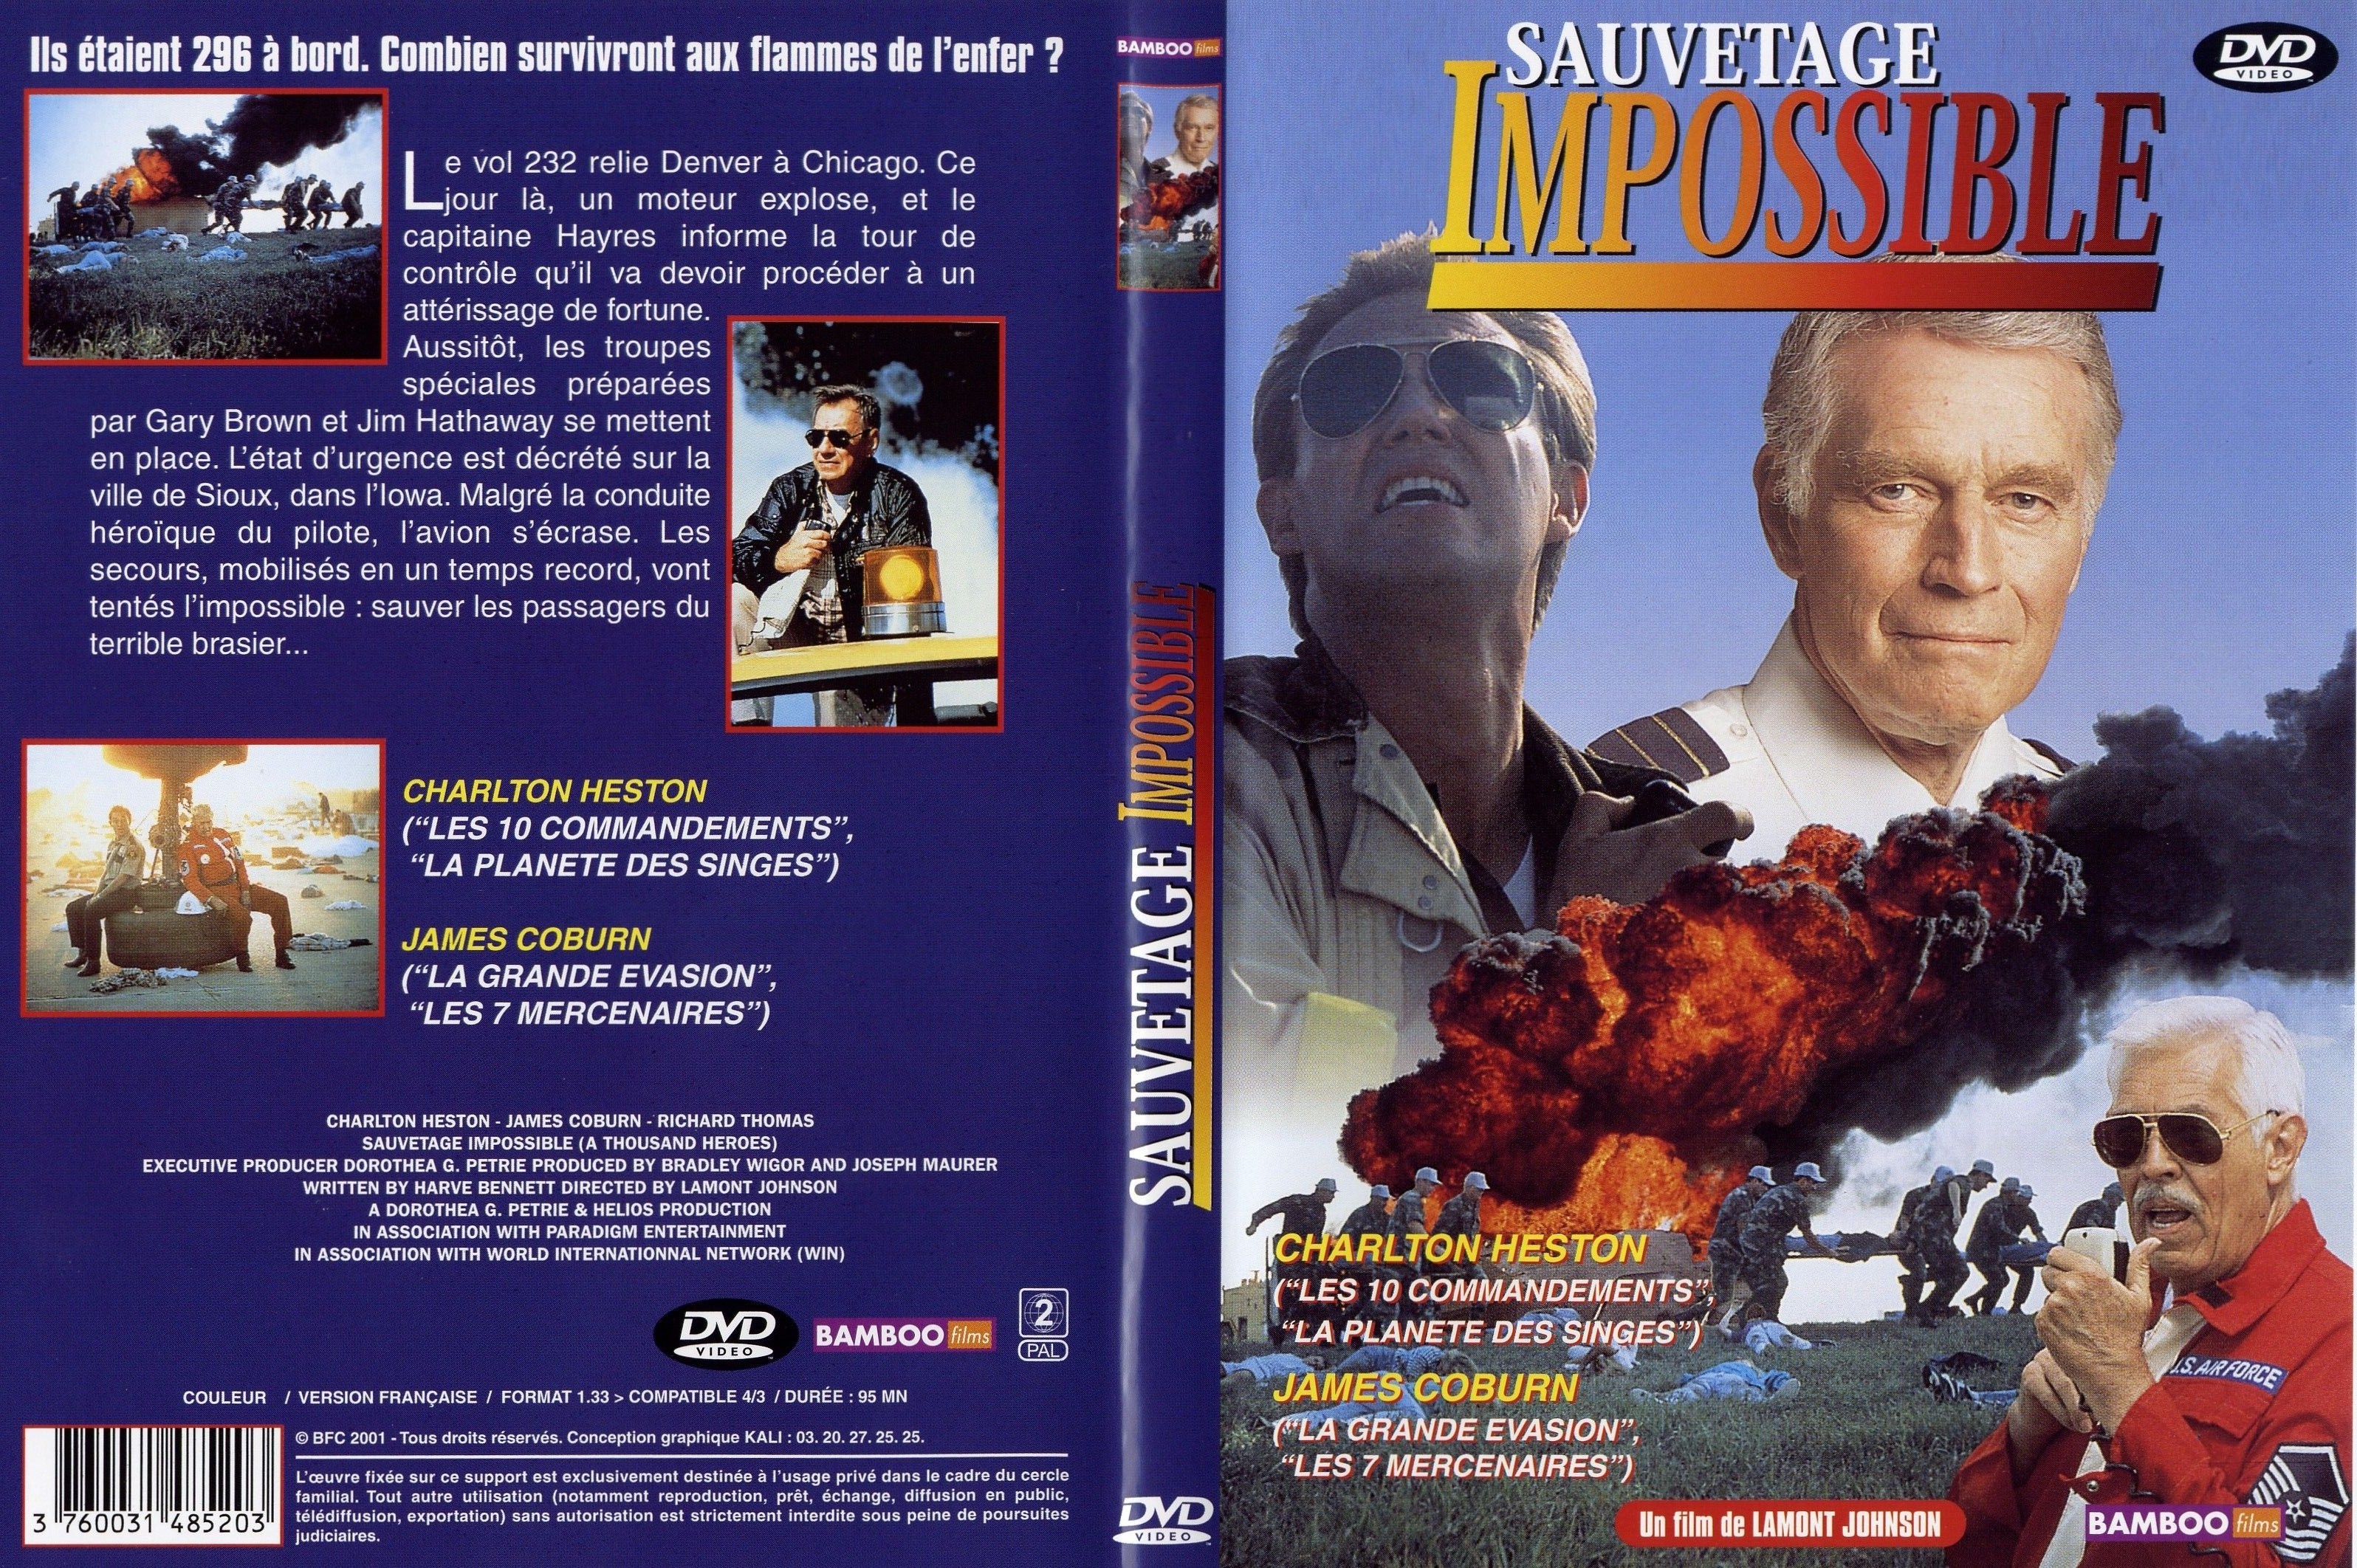 Jaquette DVD Sauvetage impossible